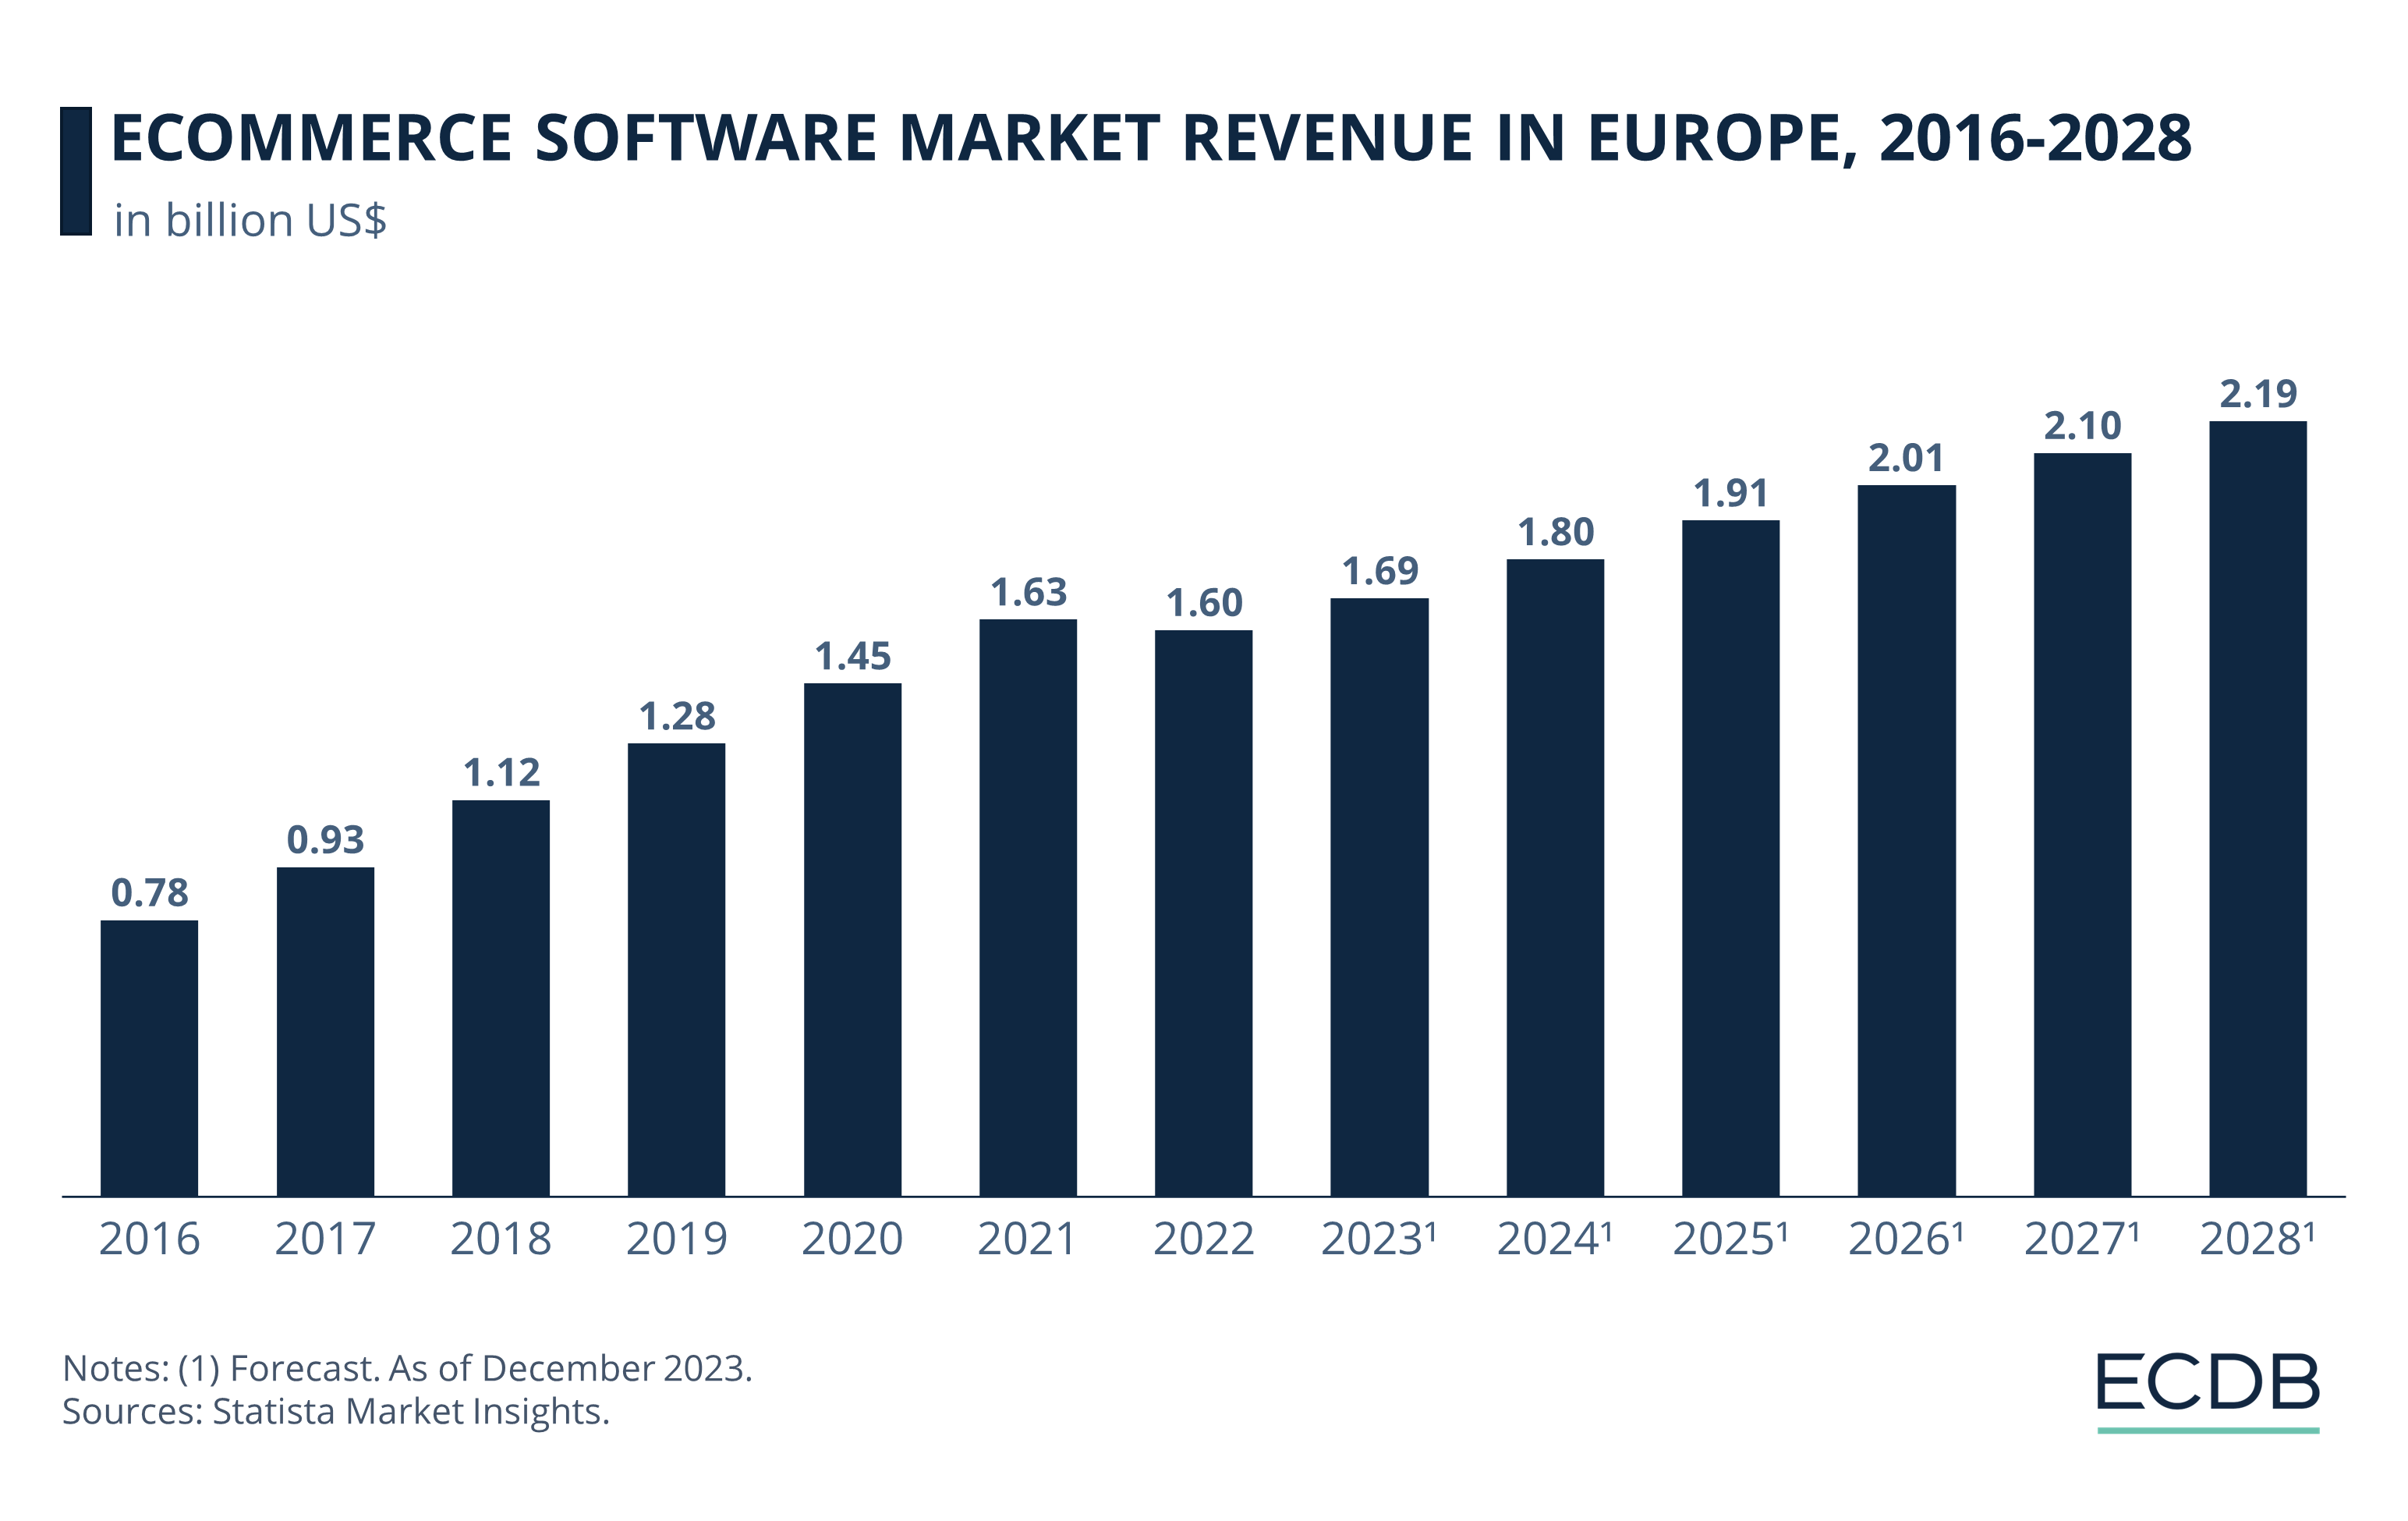 eCommerce Software Market Revenue in Europe, 2016-2028